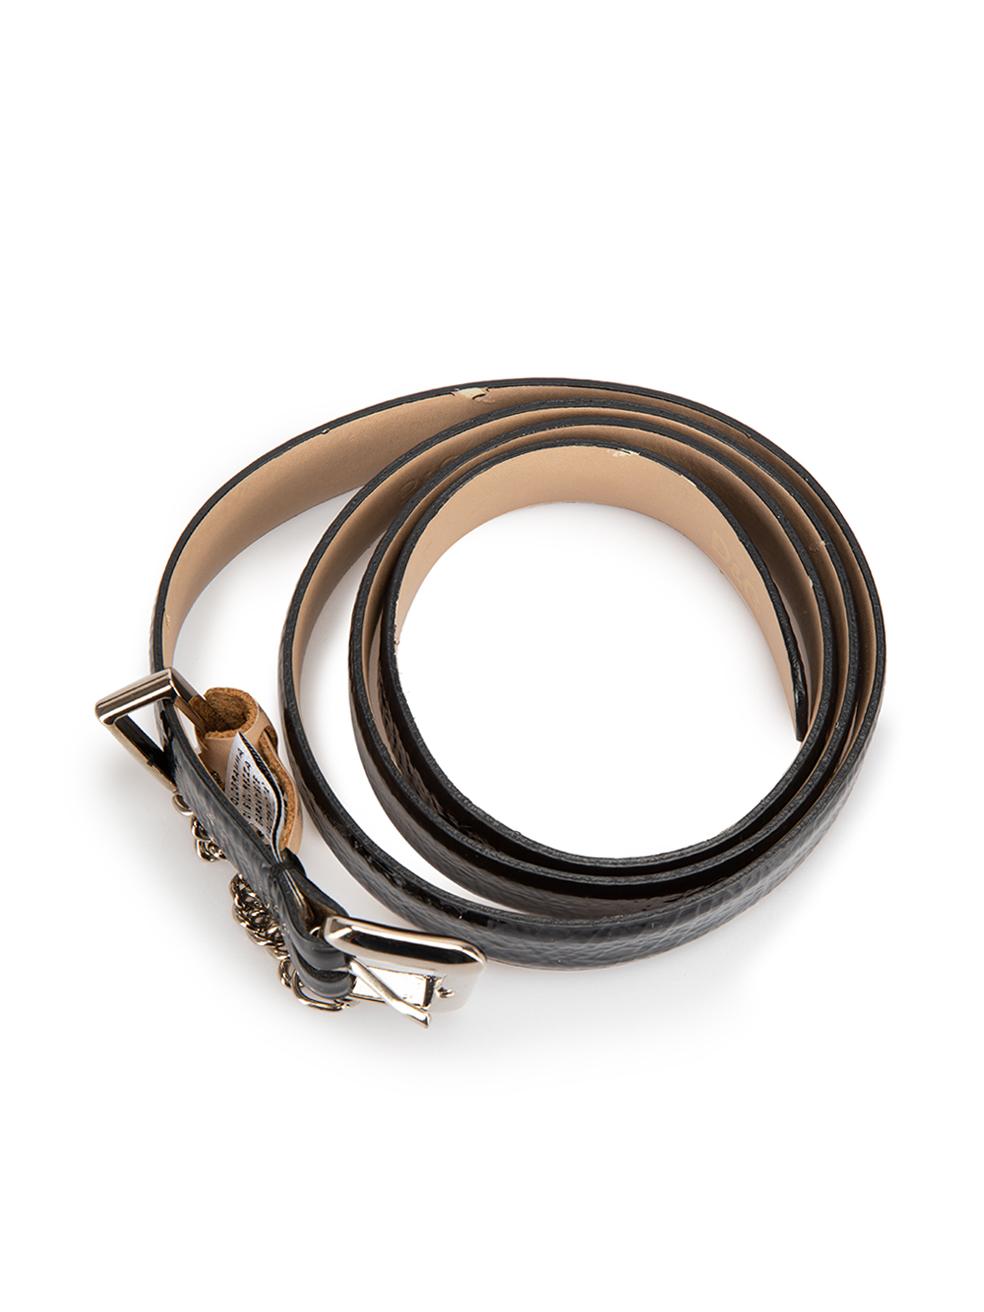 Dolce & Gabbana Women's D&G Black Patent Leather Chain Accent Belt 6